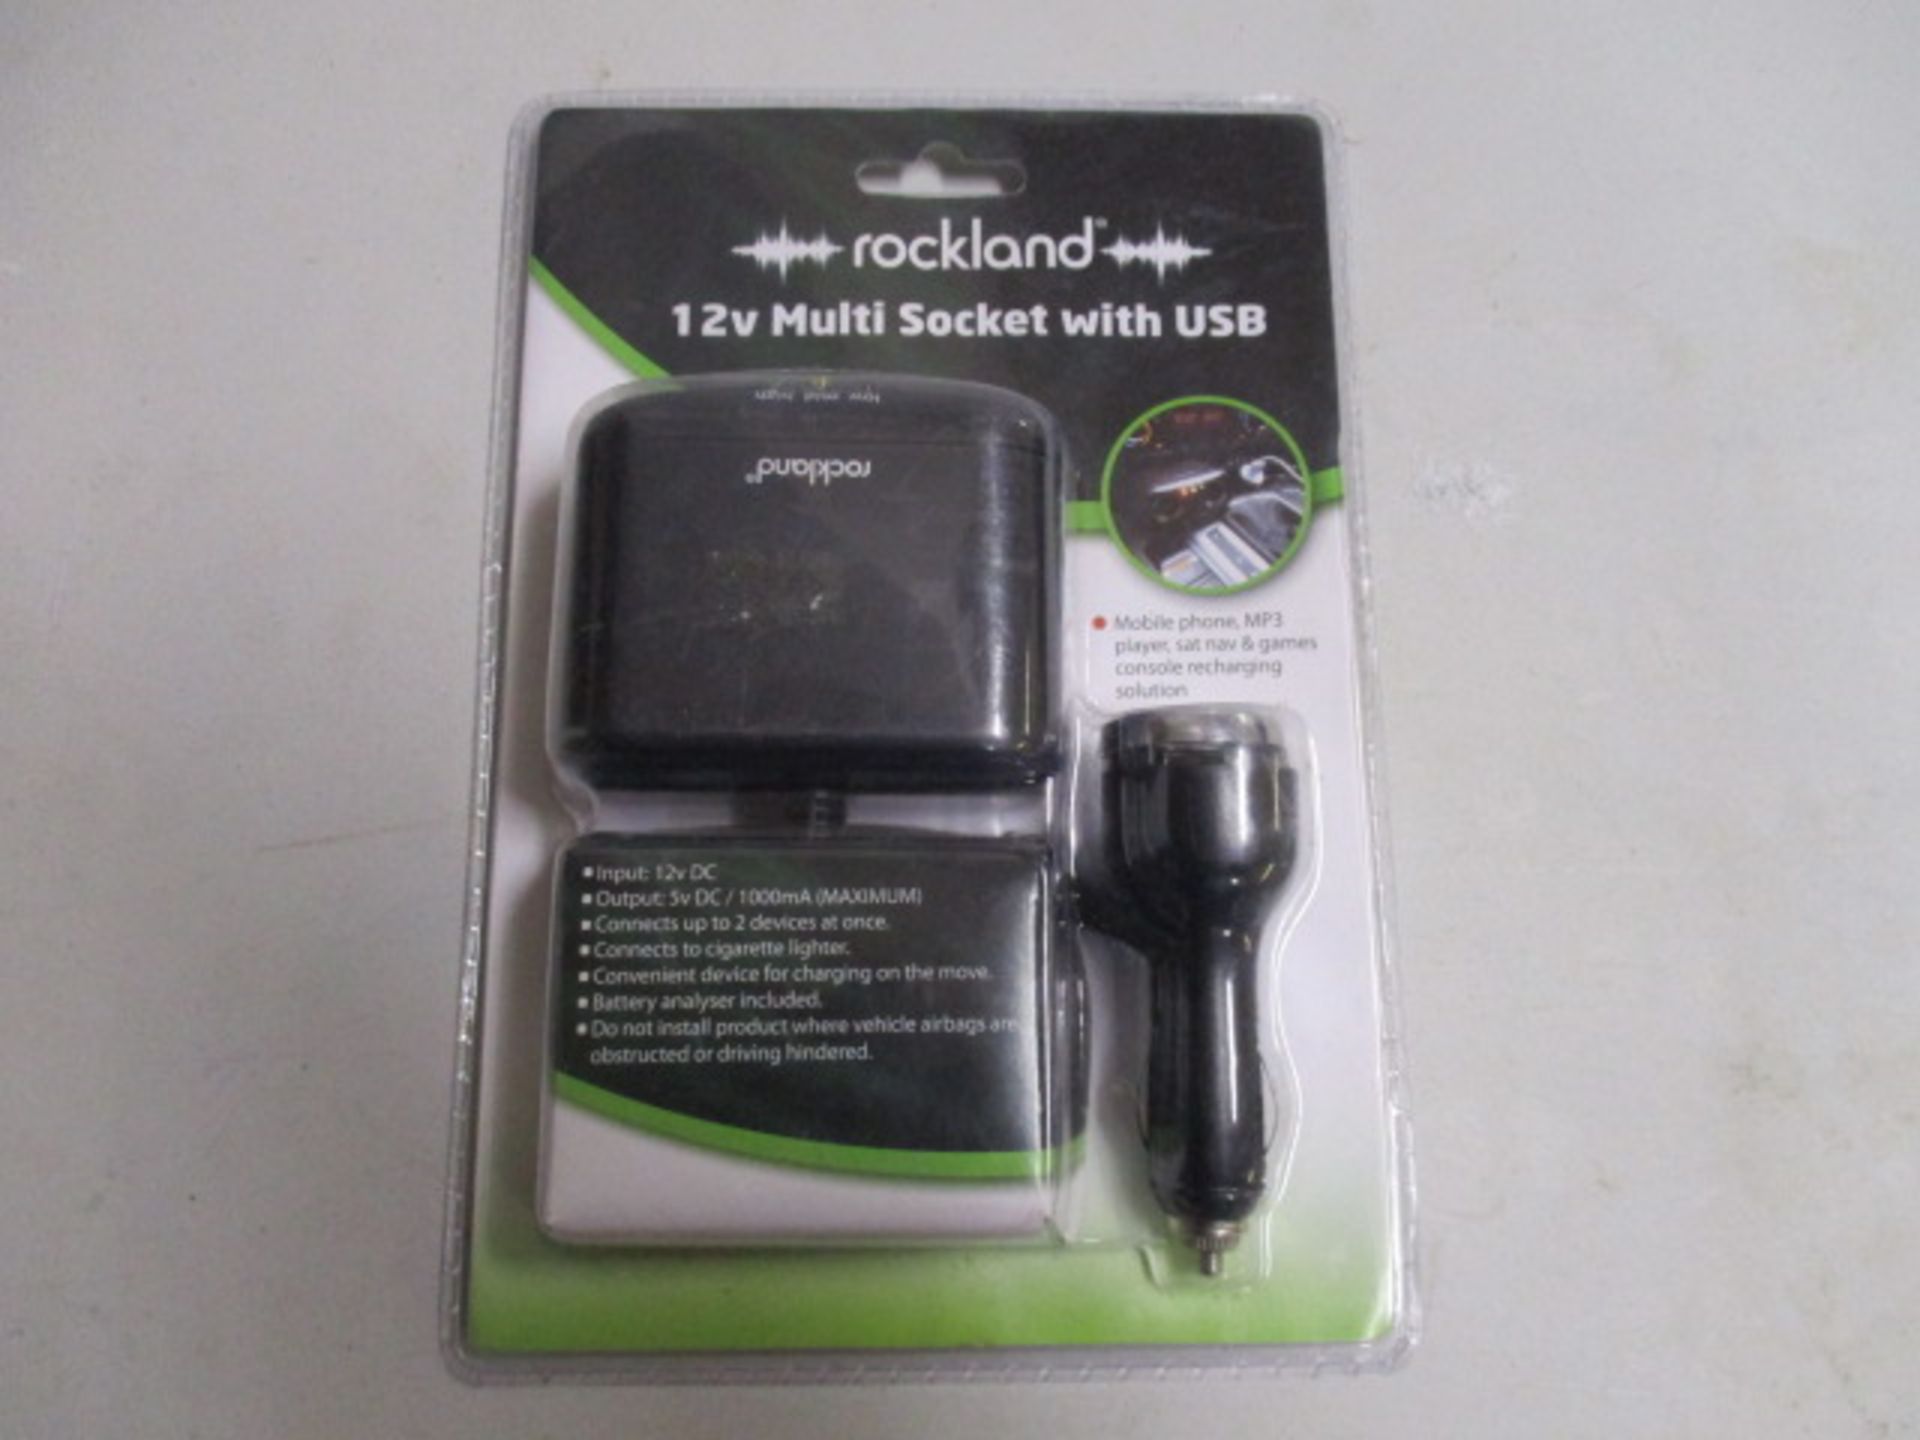 Brand new Rockland 12V multi socket with USB